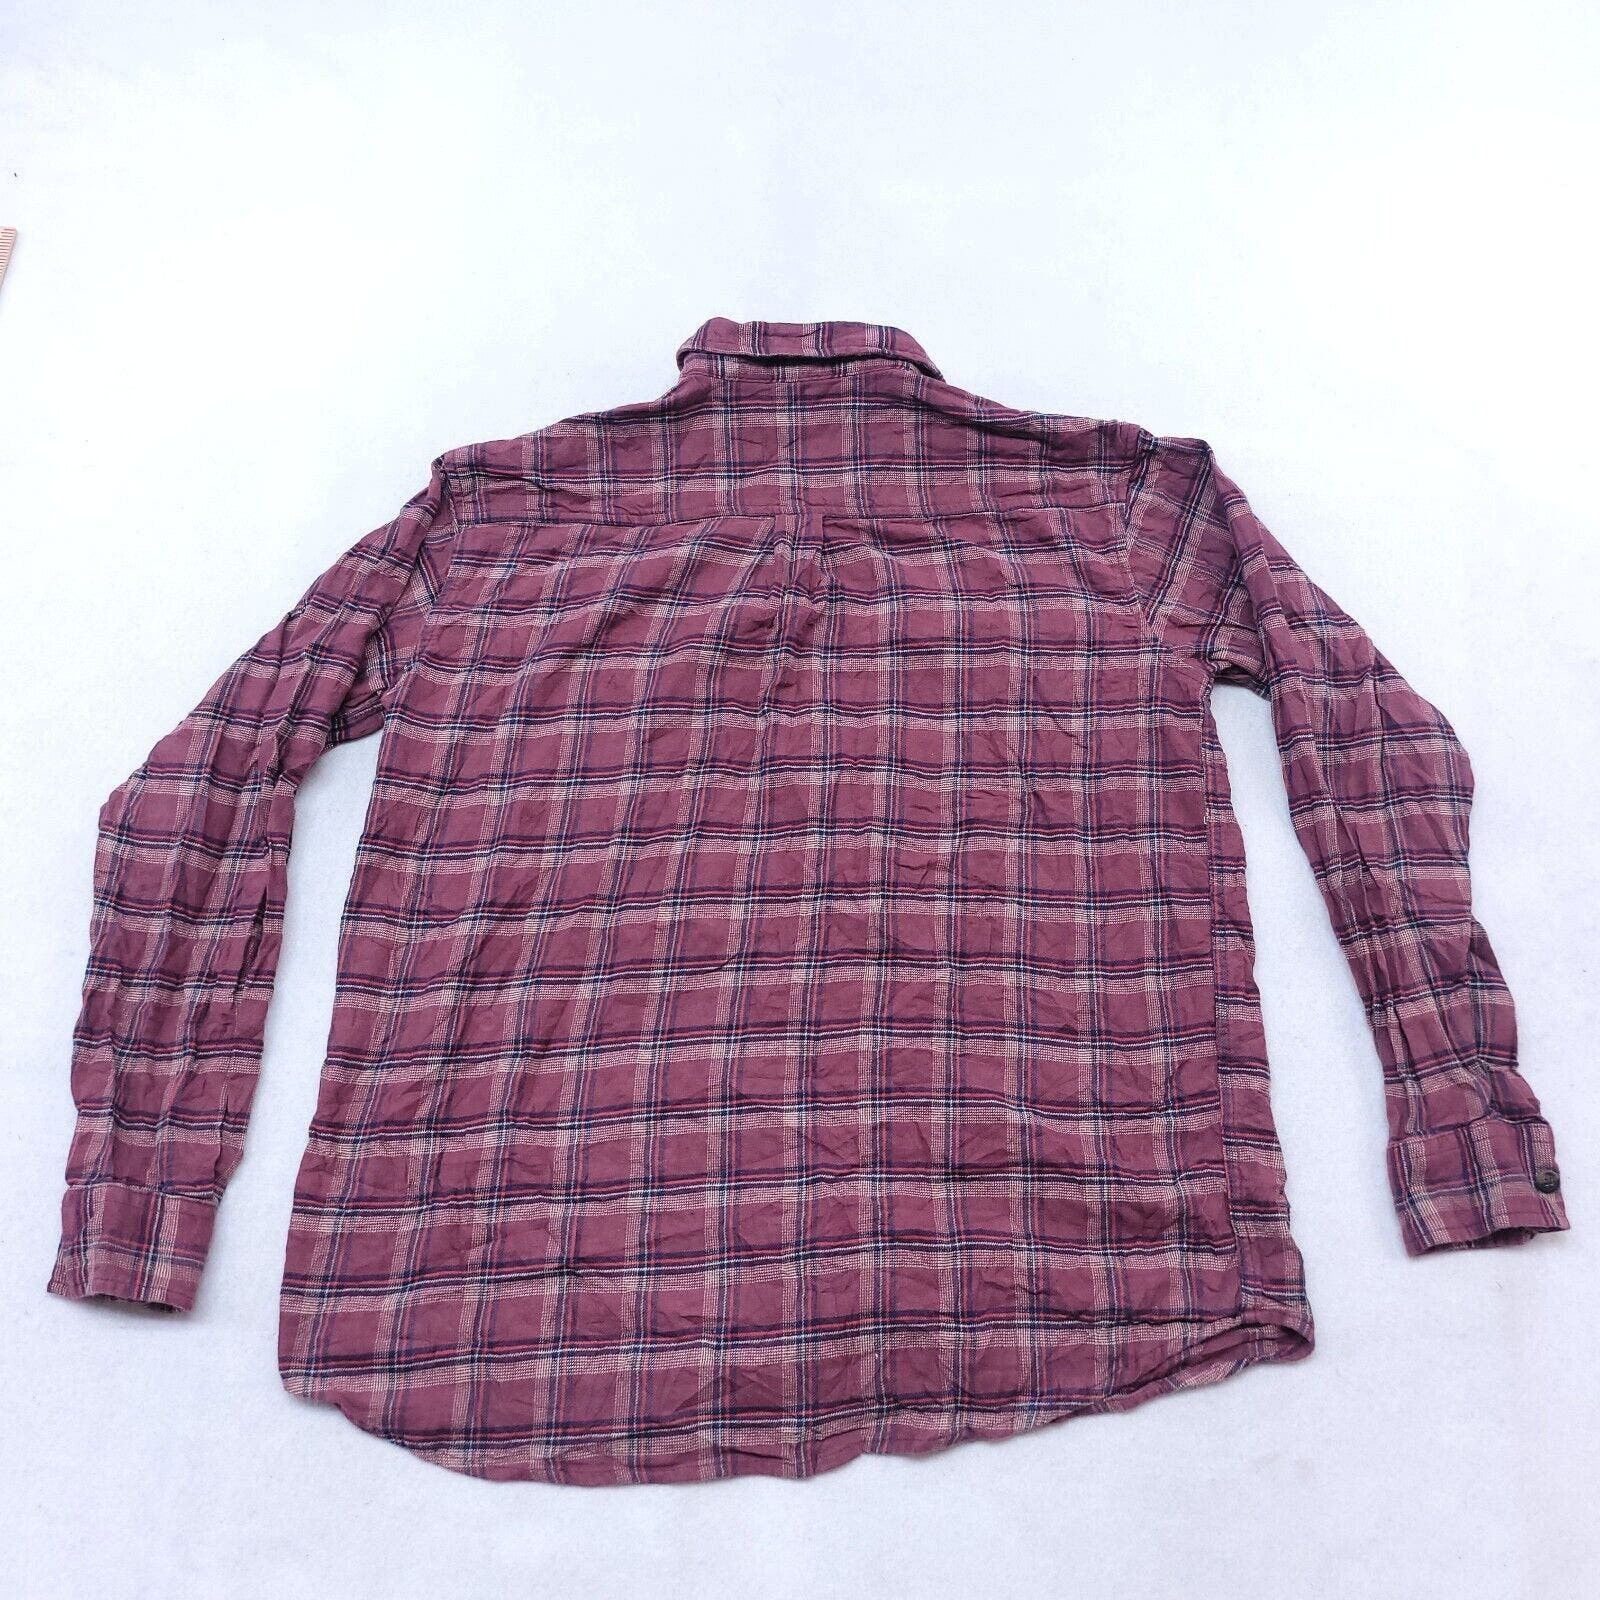 Dickies Dickies Tartan Flannel Shirt Mens Size Large L Maroon Blue Size US L / EU 52-54 / 3 - 10 Preview